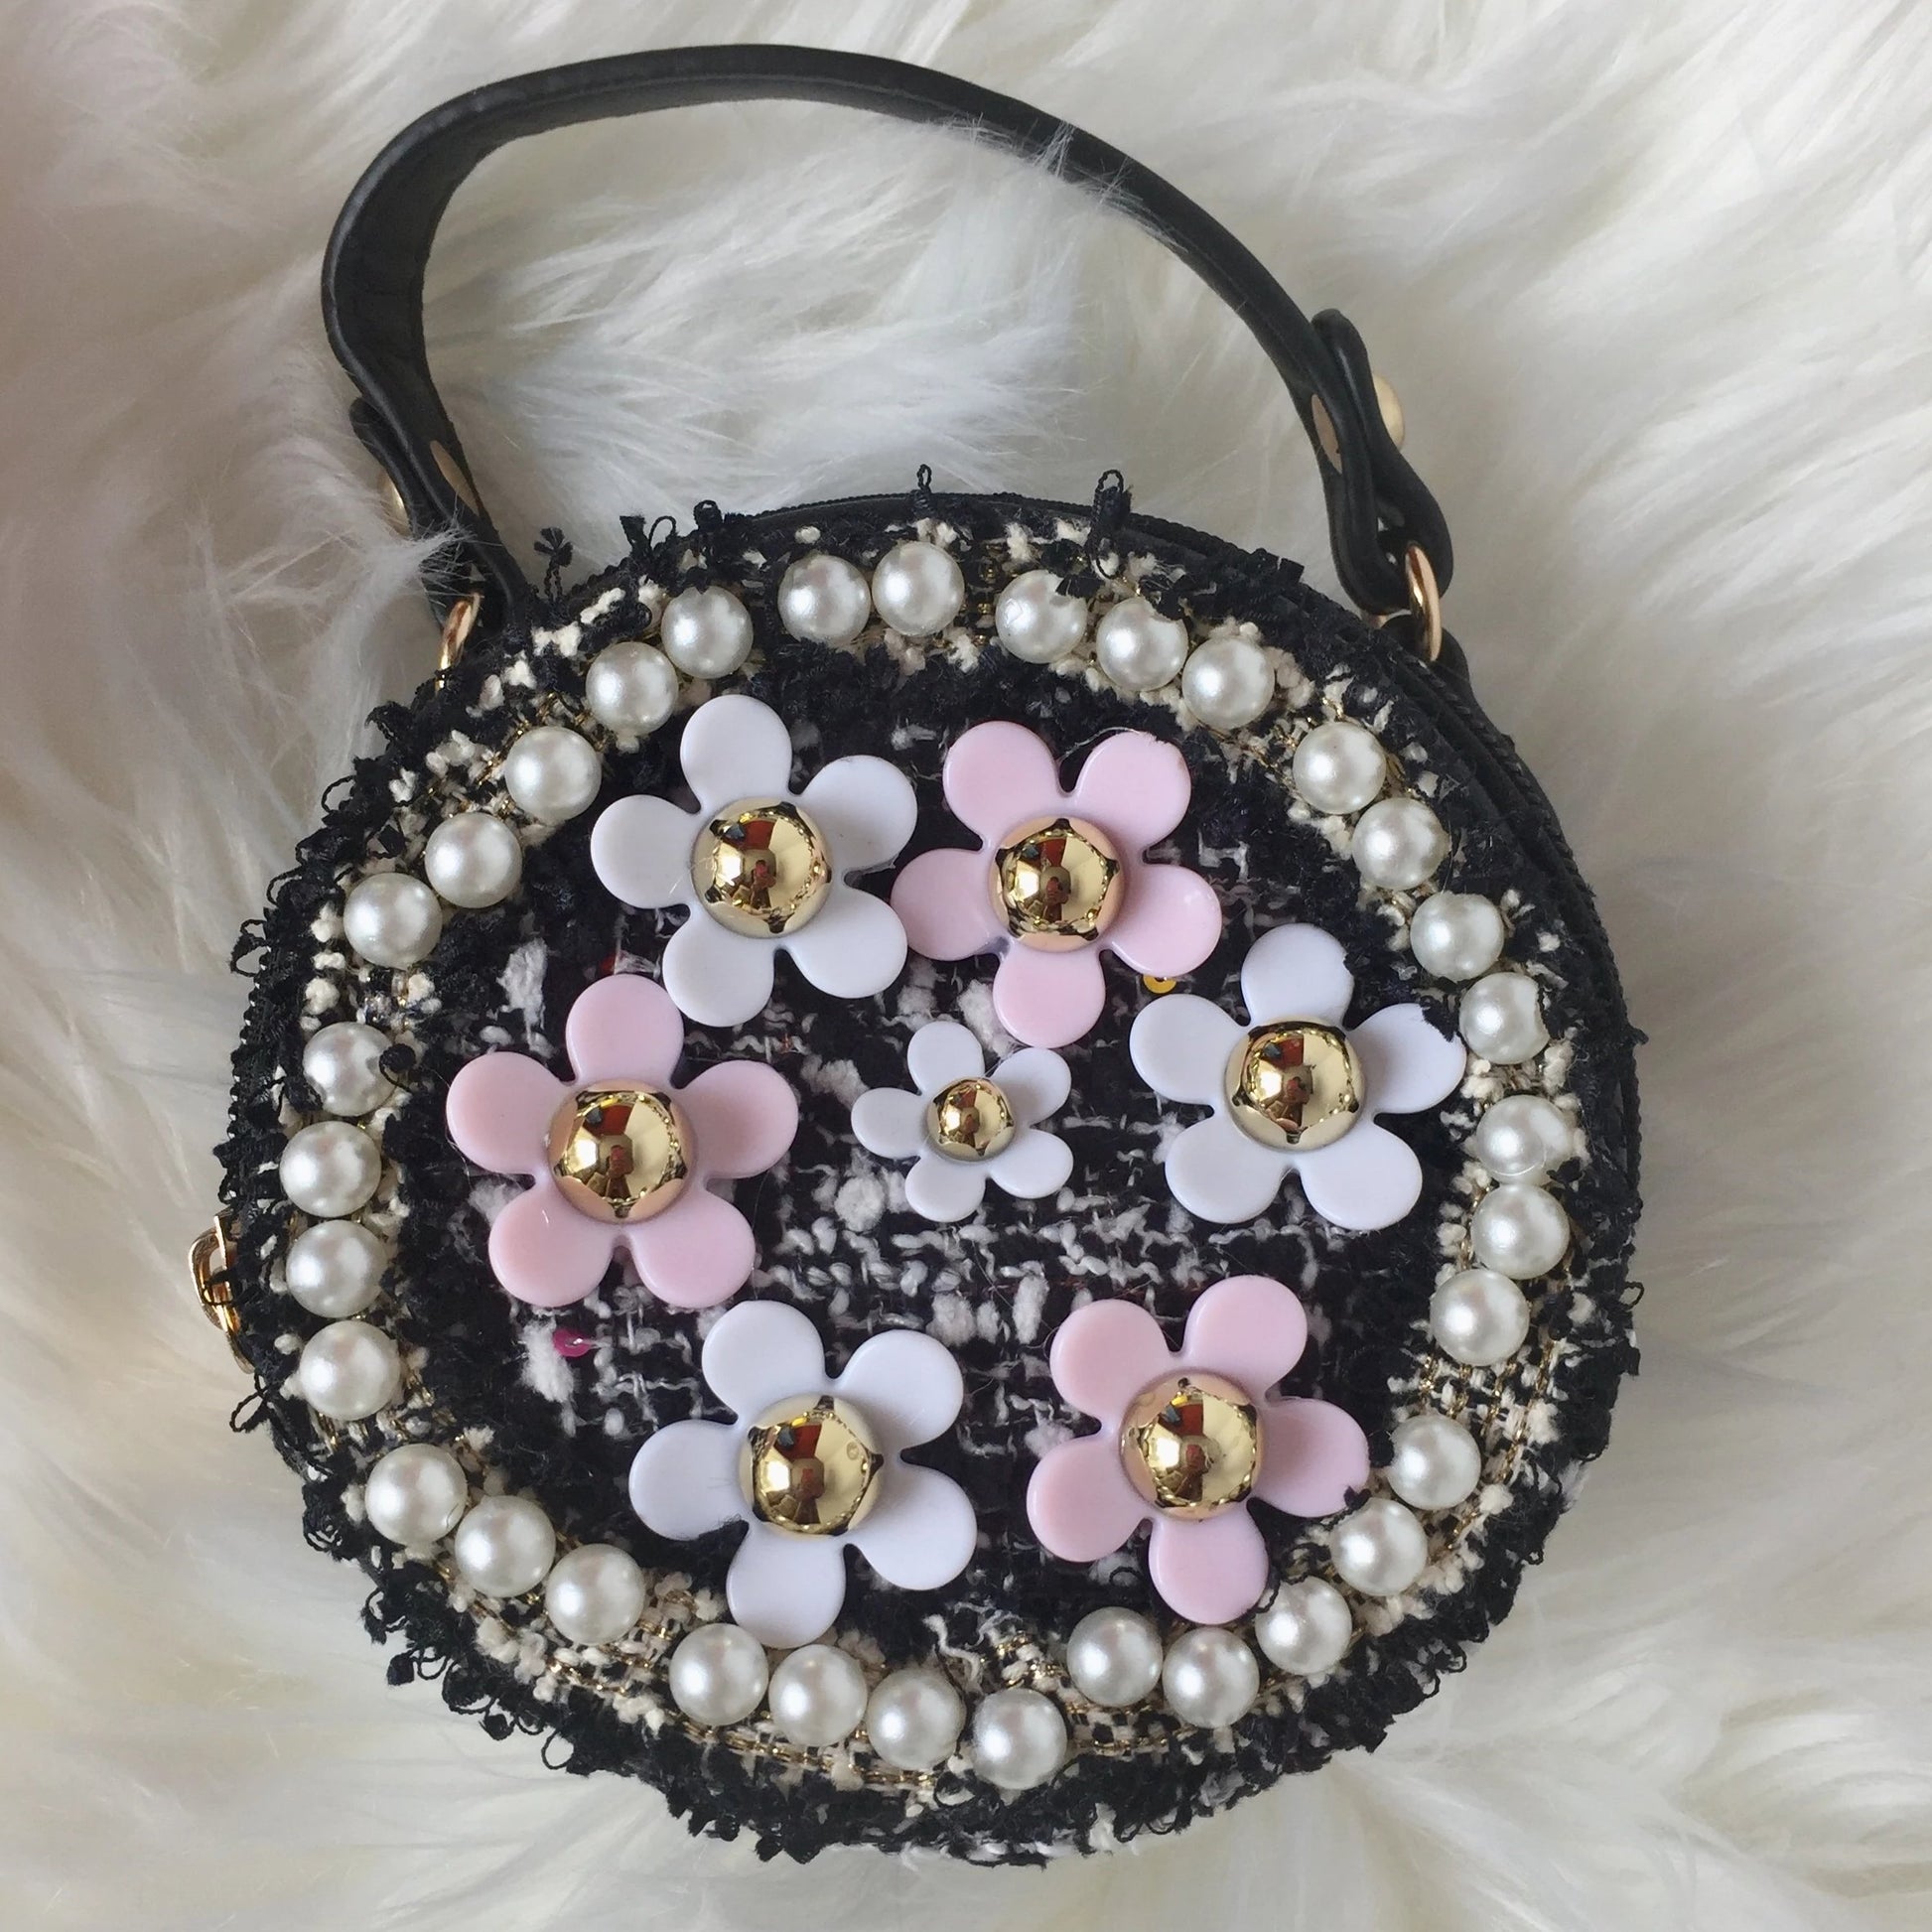 Flower Kids Girls' fashion Mini Handbags girl handbag flower tweed Princess